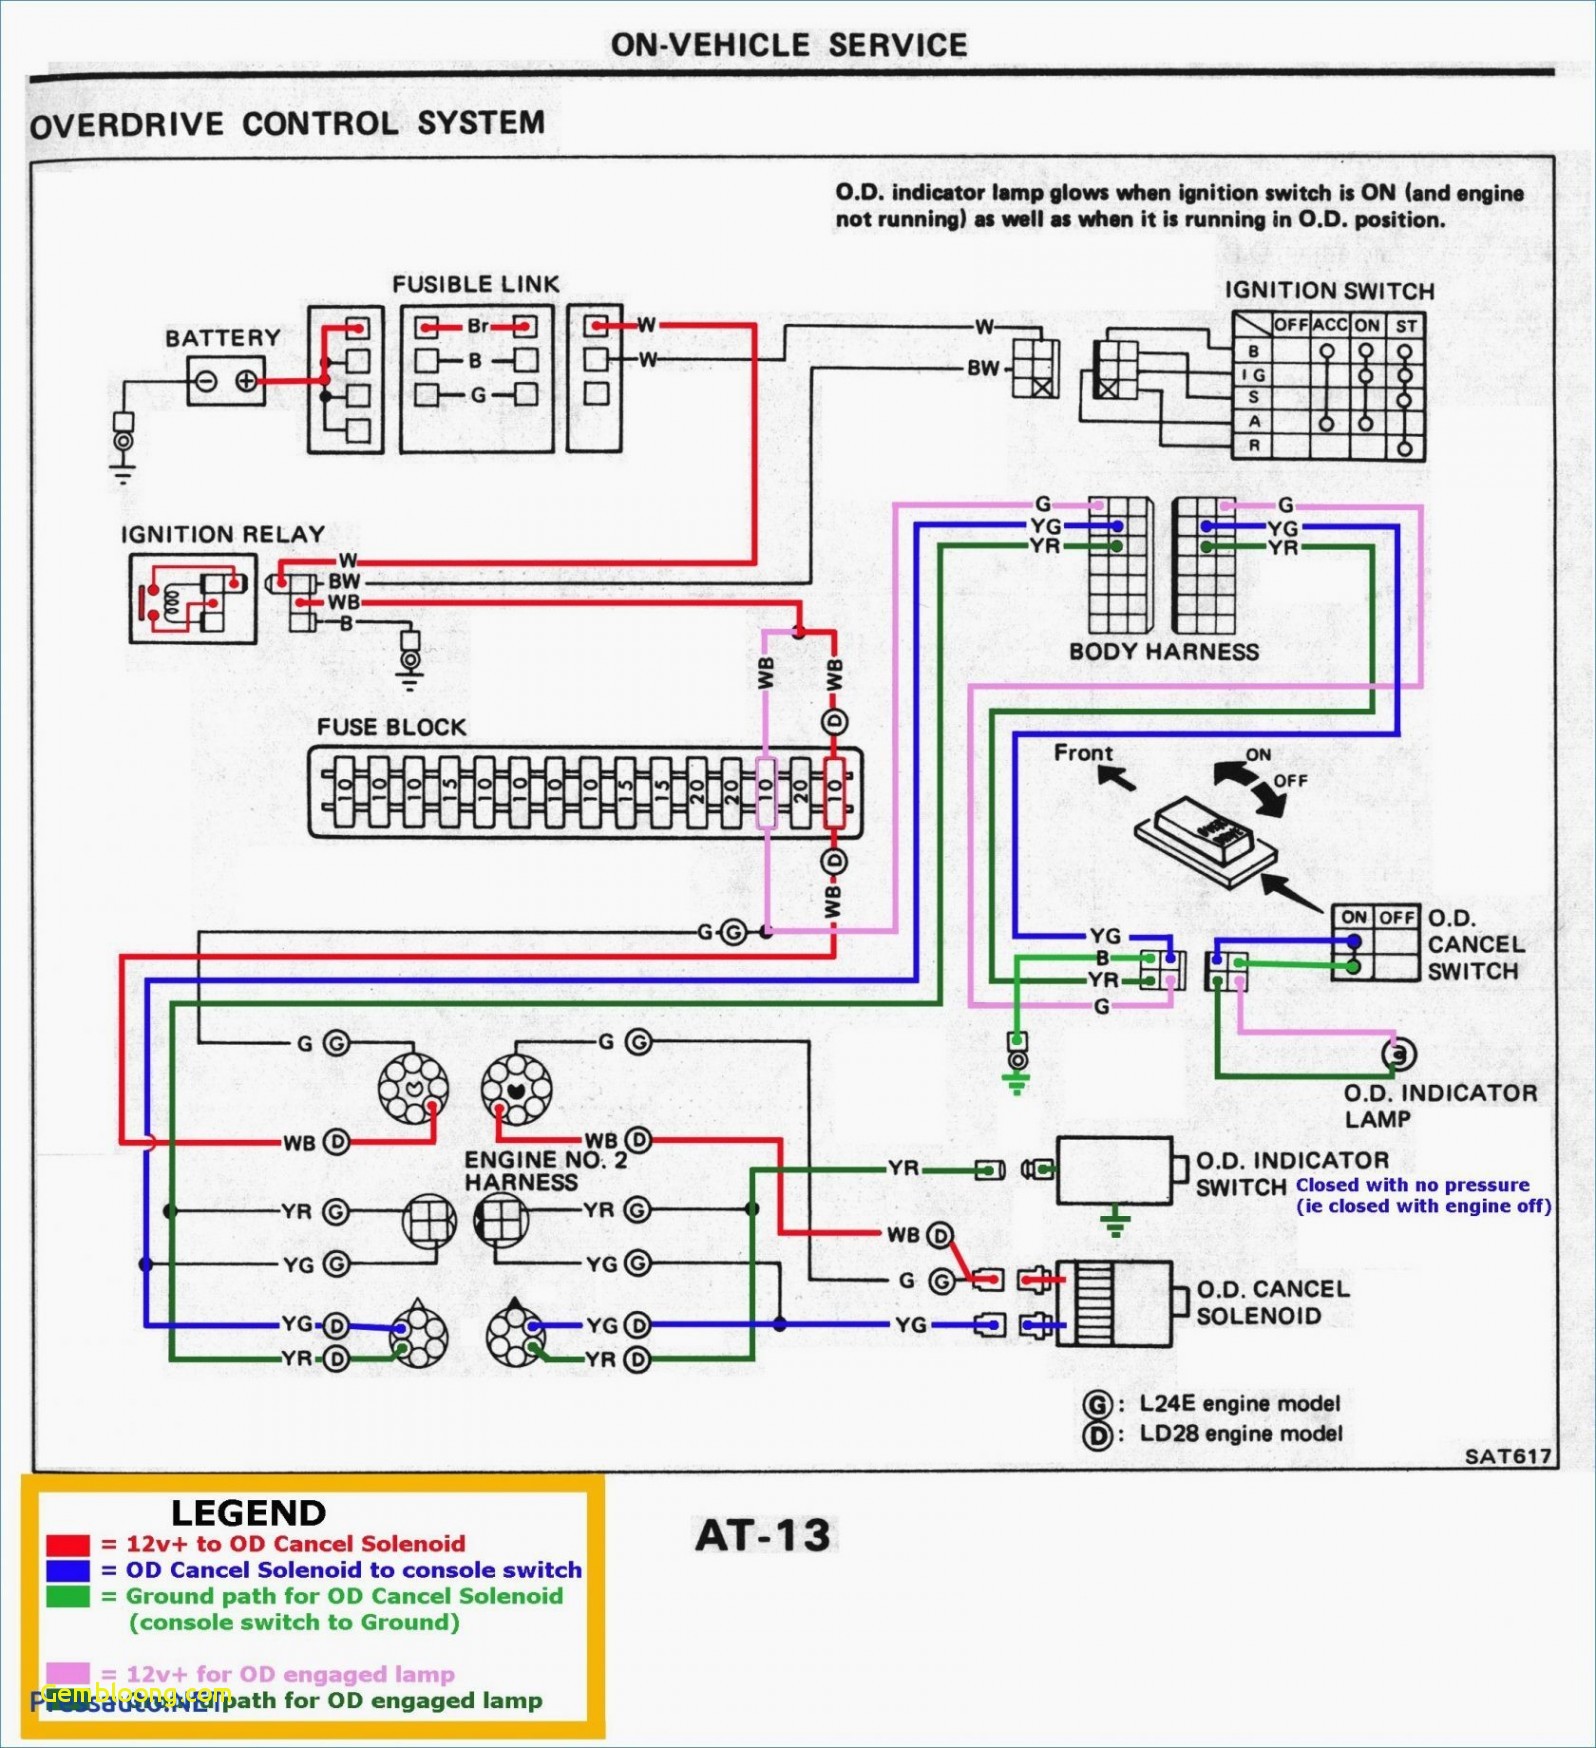 Ford Fiesta Engine Diagram Free ford Trucks Wiring Diagrams Wiring Diagram for ford F150 Of Ford Fiesta Engine Diagram